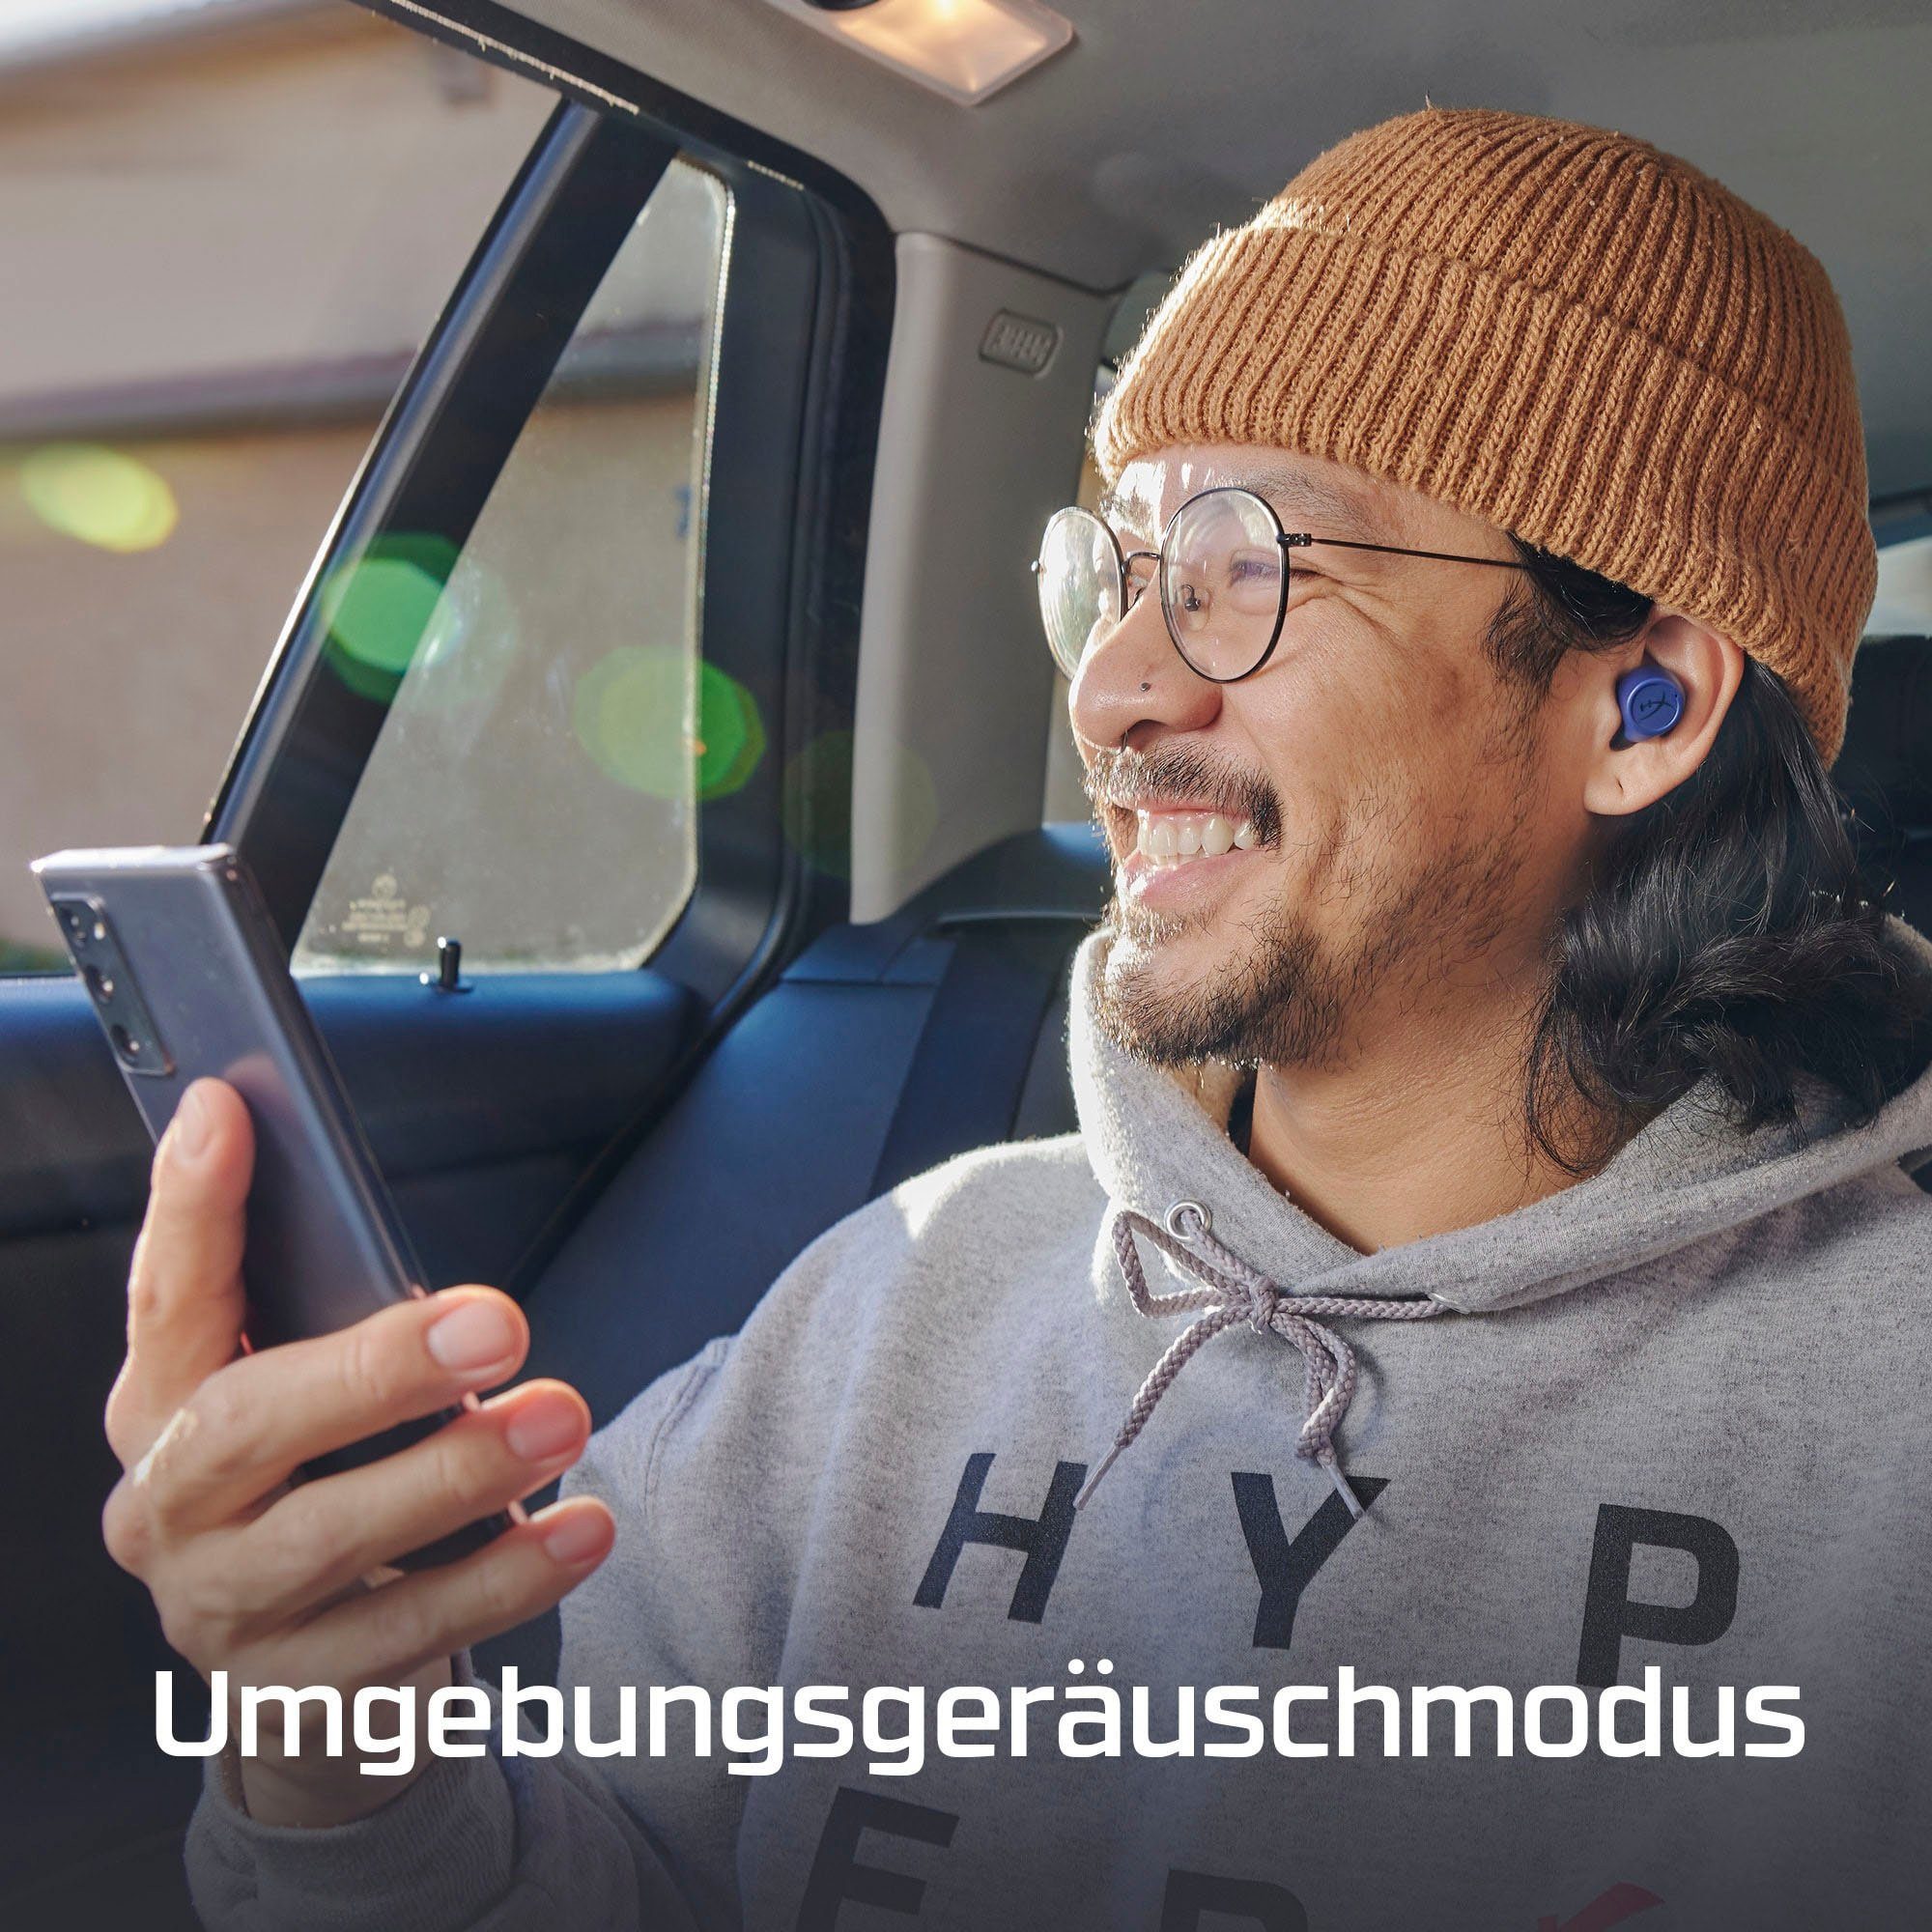 Wireless, HyperX Cirro (Rauschunterdrückung, True Bluetooth) In-Ear-Kopfhörer Buds Pro